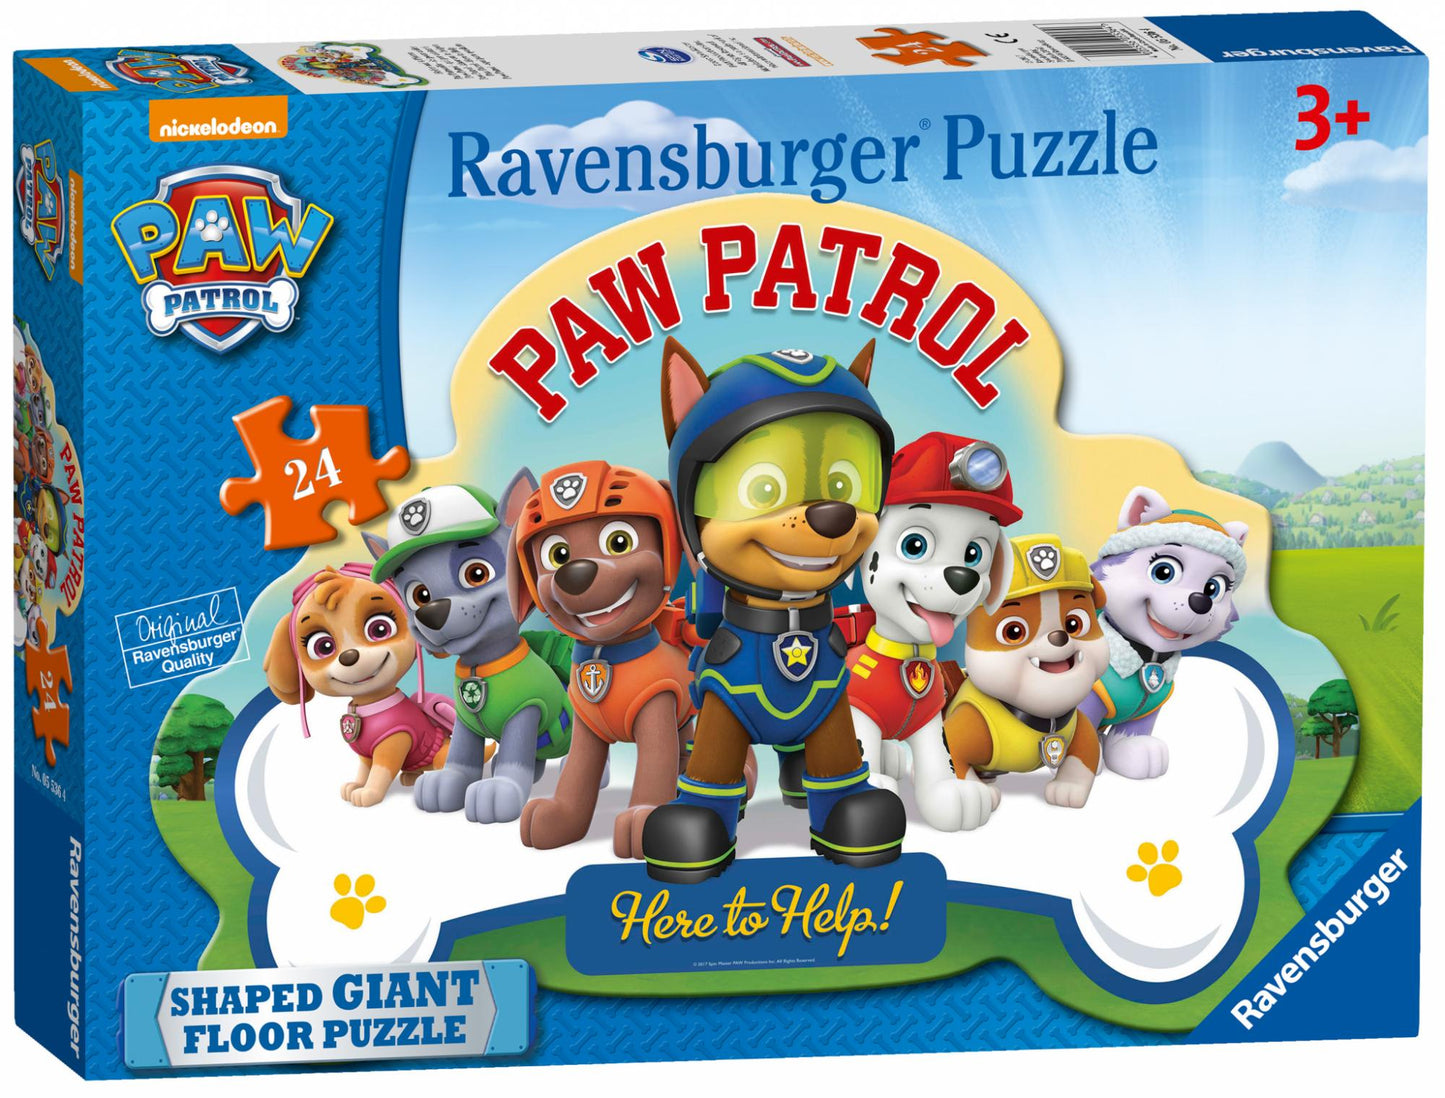 Ravensburger Paw Patrol, 24pc Giant Shaped Floor Jigsaw Puzzle